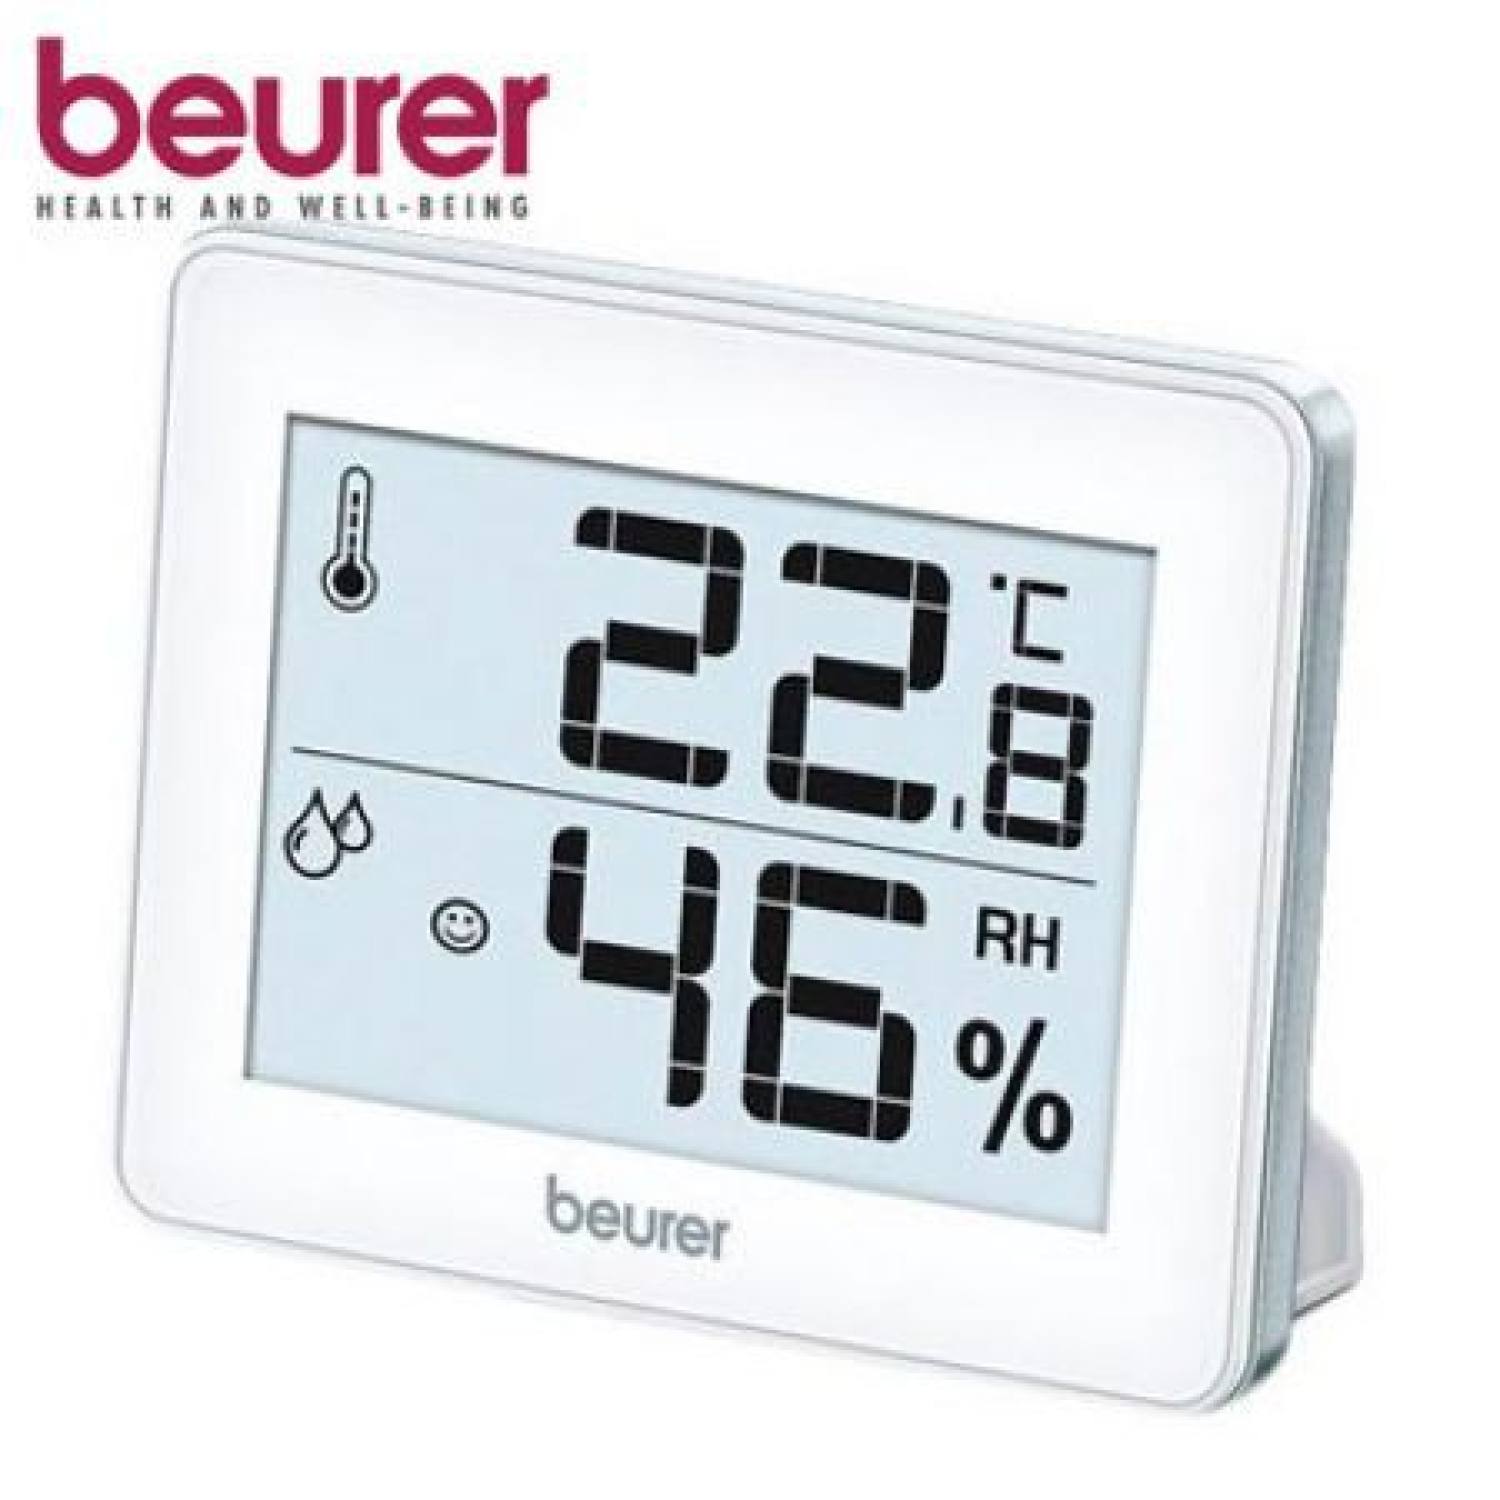 Beurer hm16 hygrometer temperature humidity meter LCD display wall hook